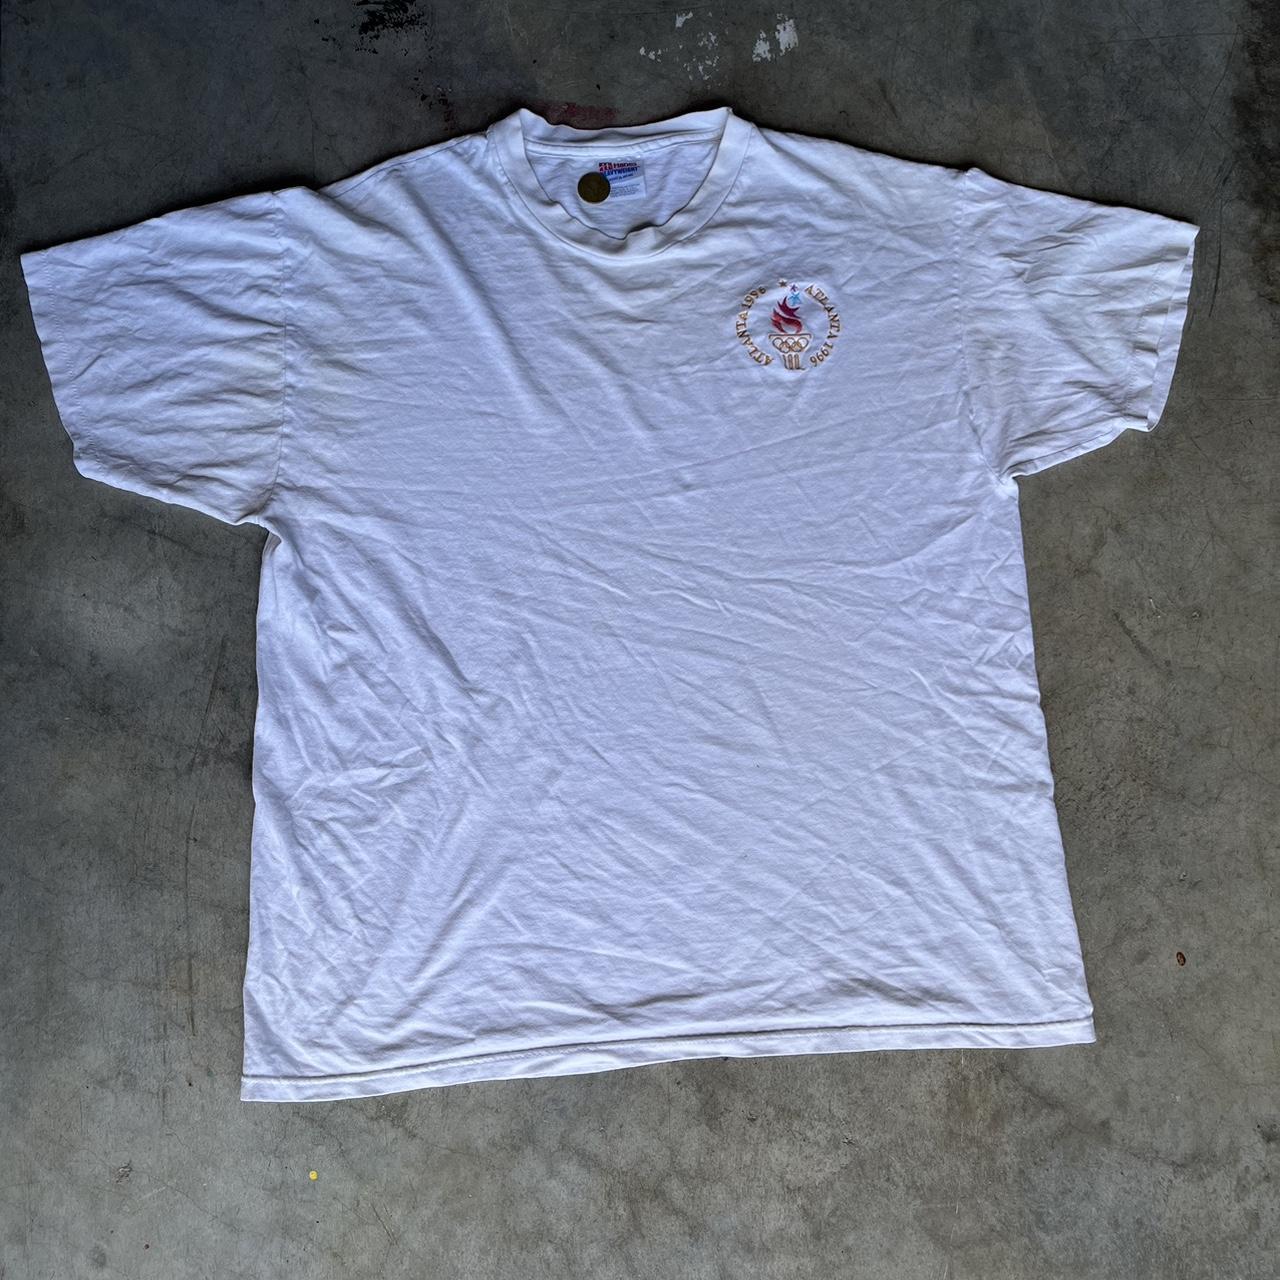 1996 Olympic shirt XL - Depop